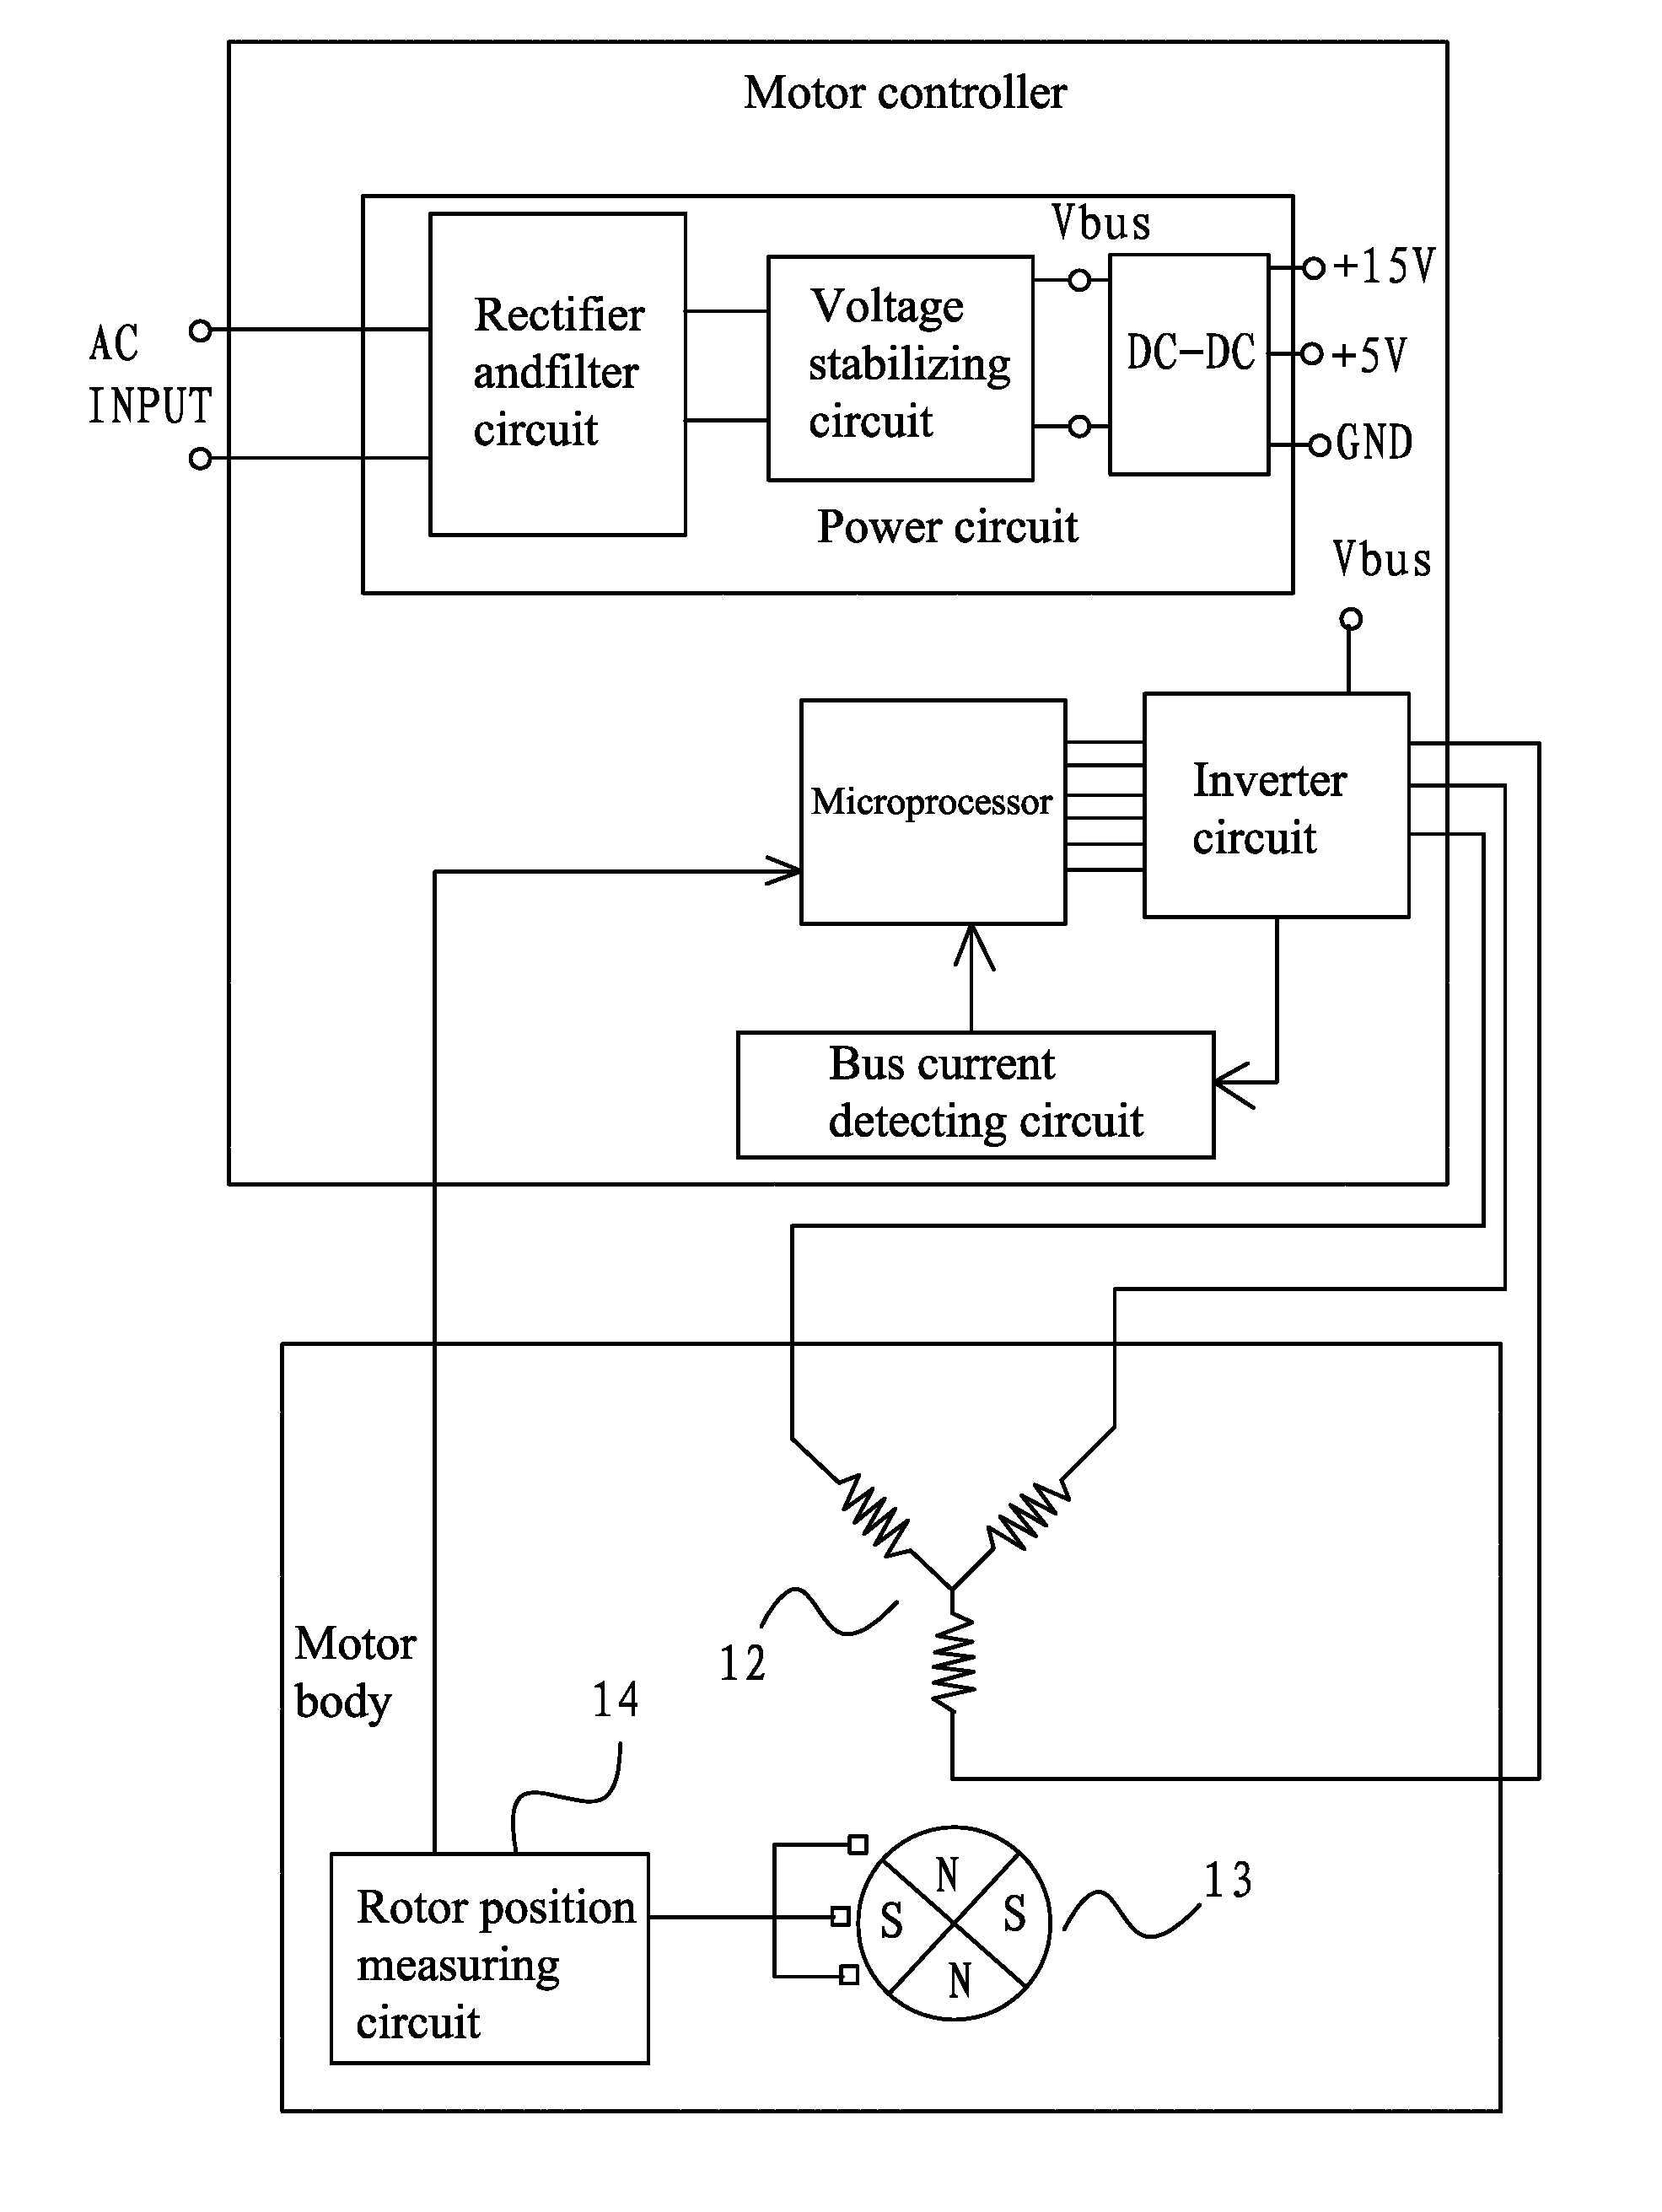 Method for controlling constant air volume of ecm motor in HVAC system